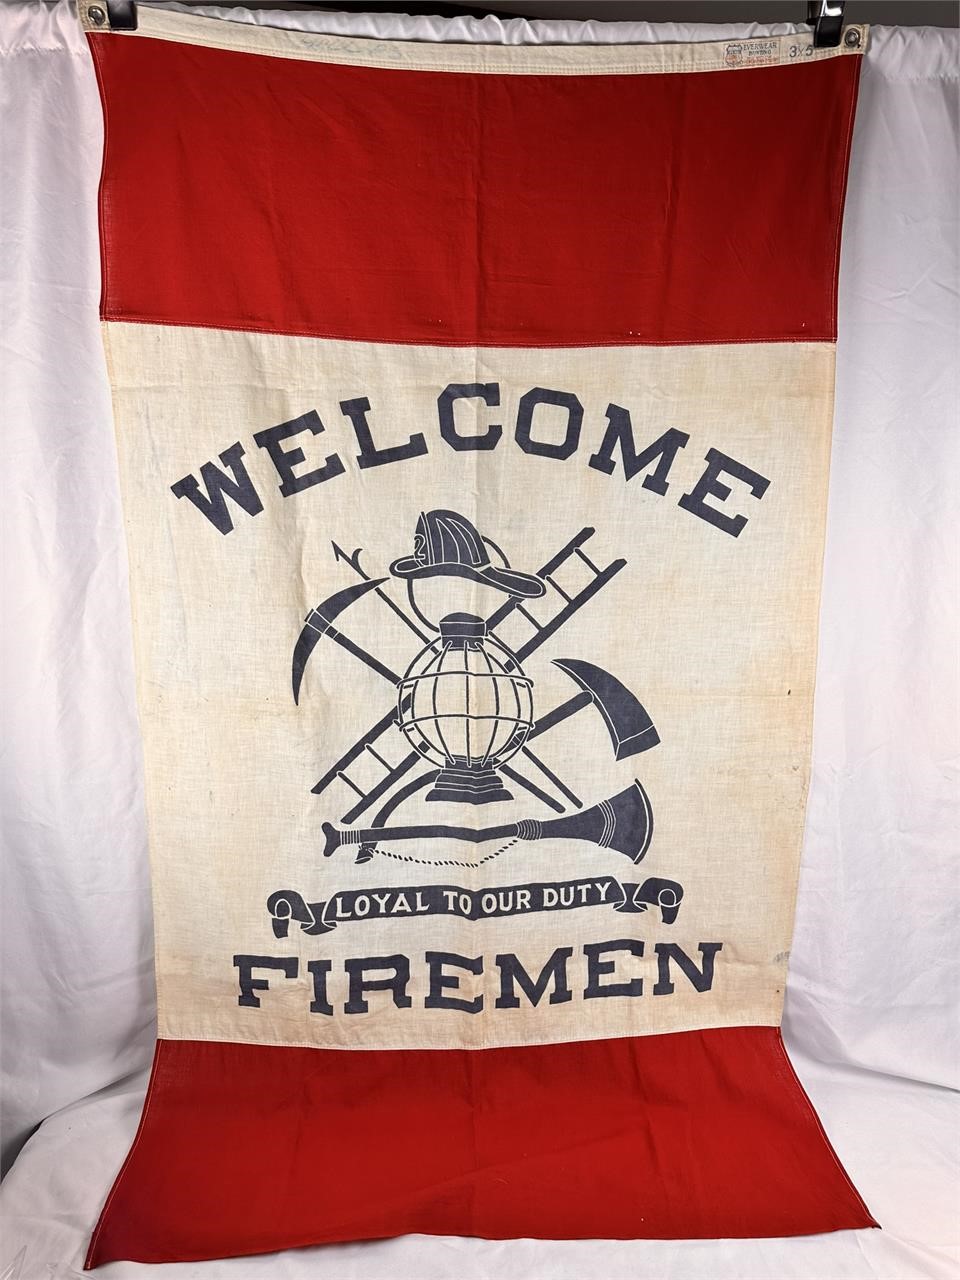 3'x5' Vintage Welcome Firemen banner